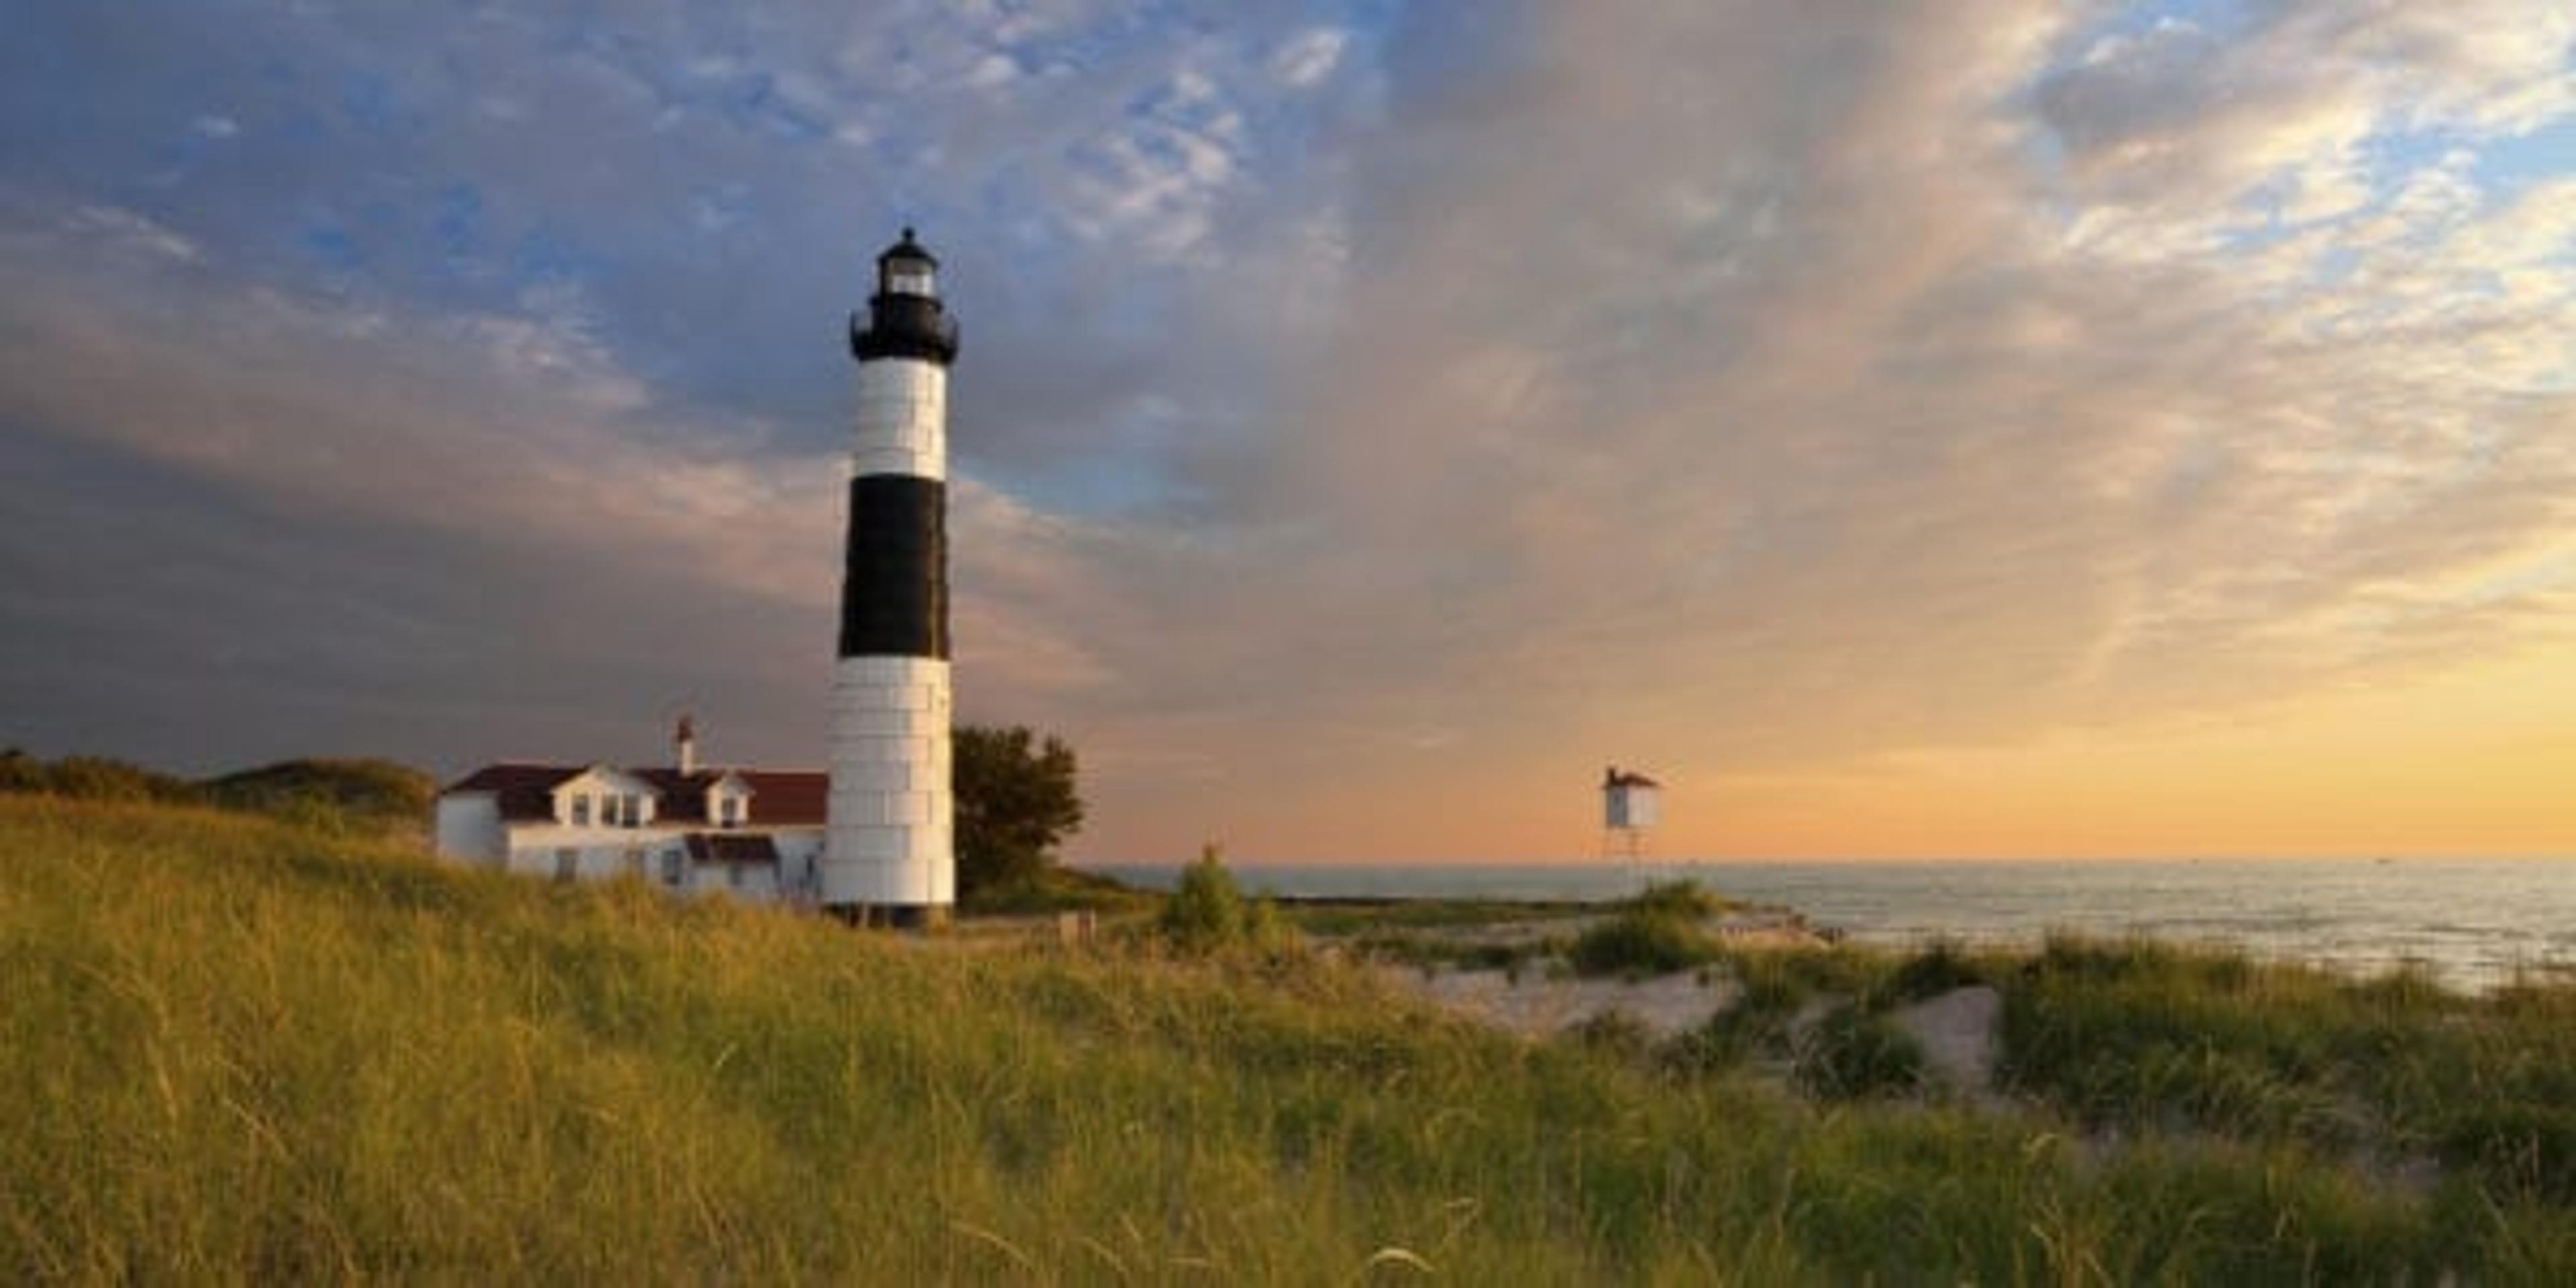 "Image of the Big Sable Point Lighthouse, Michigan, USA."